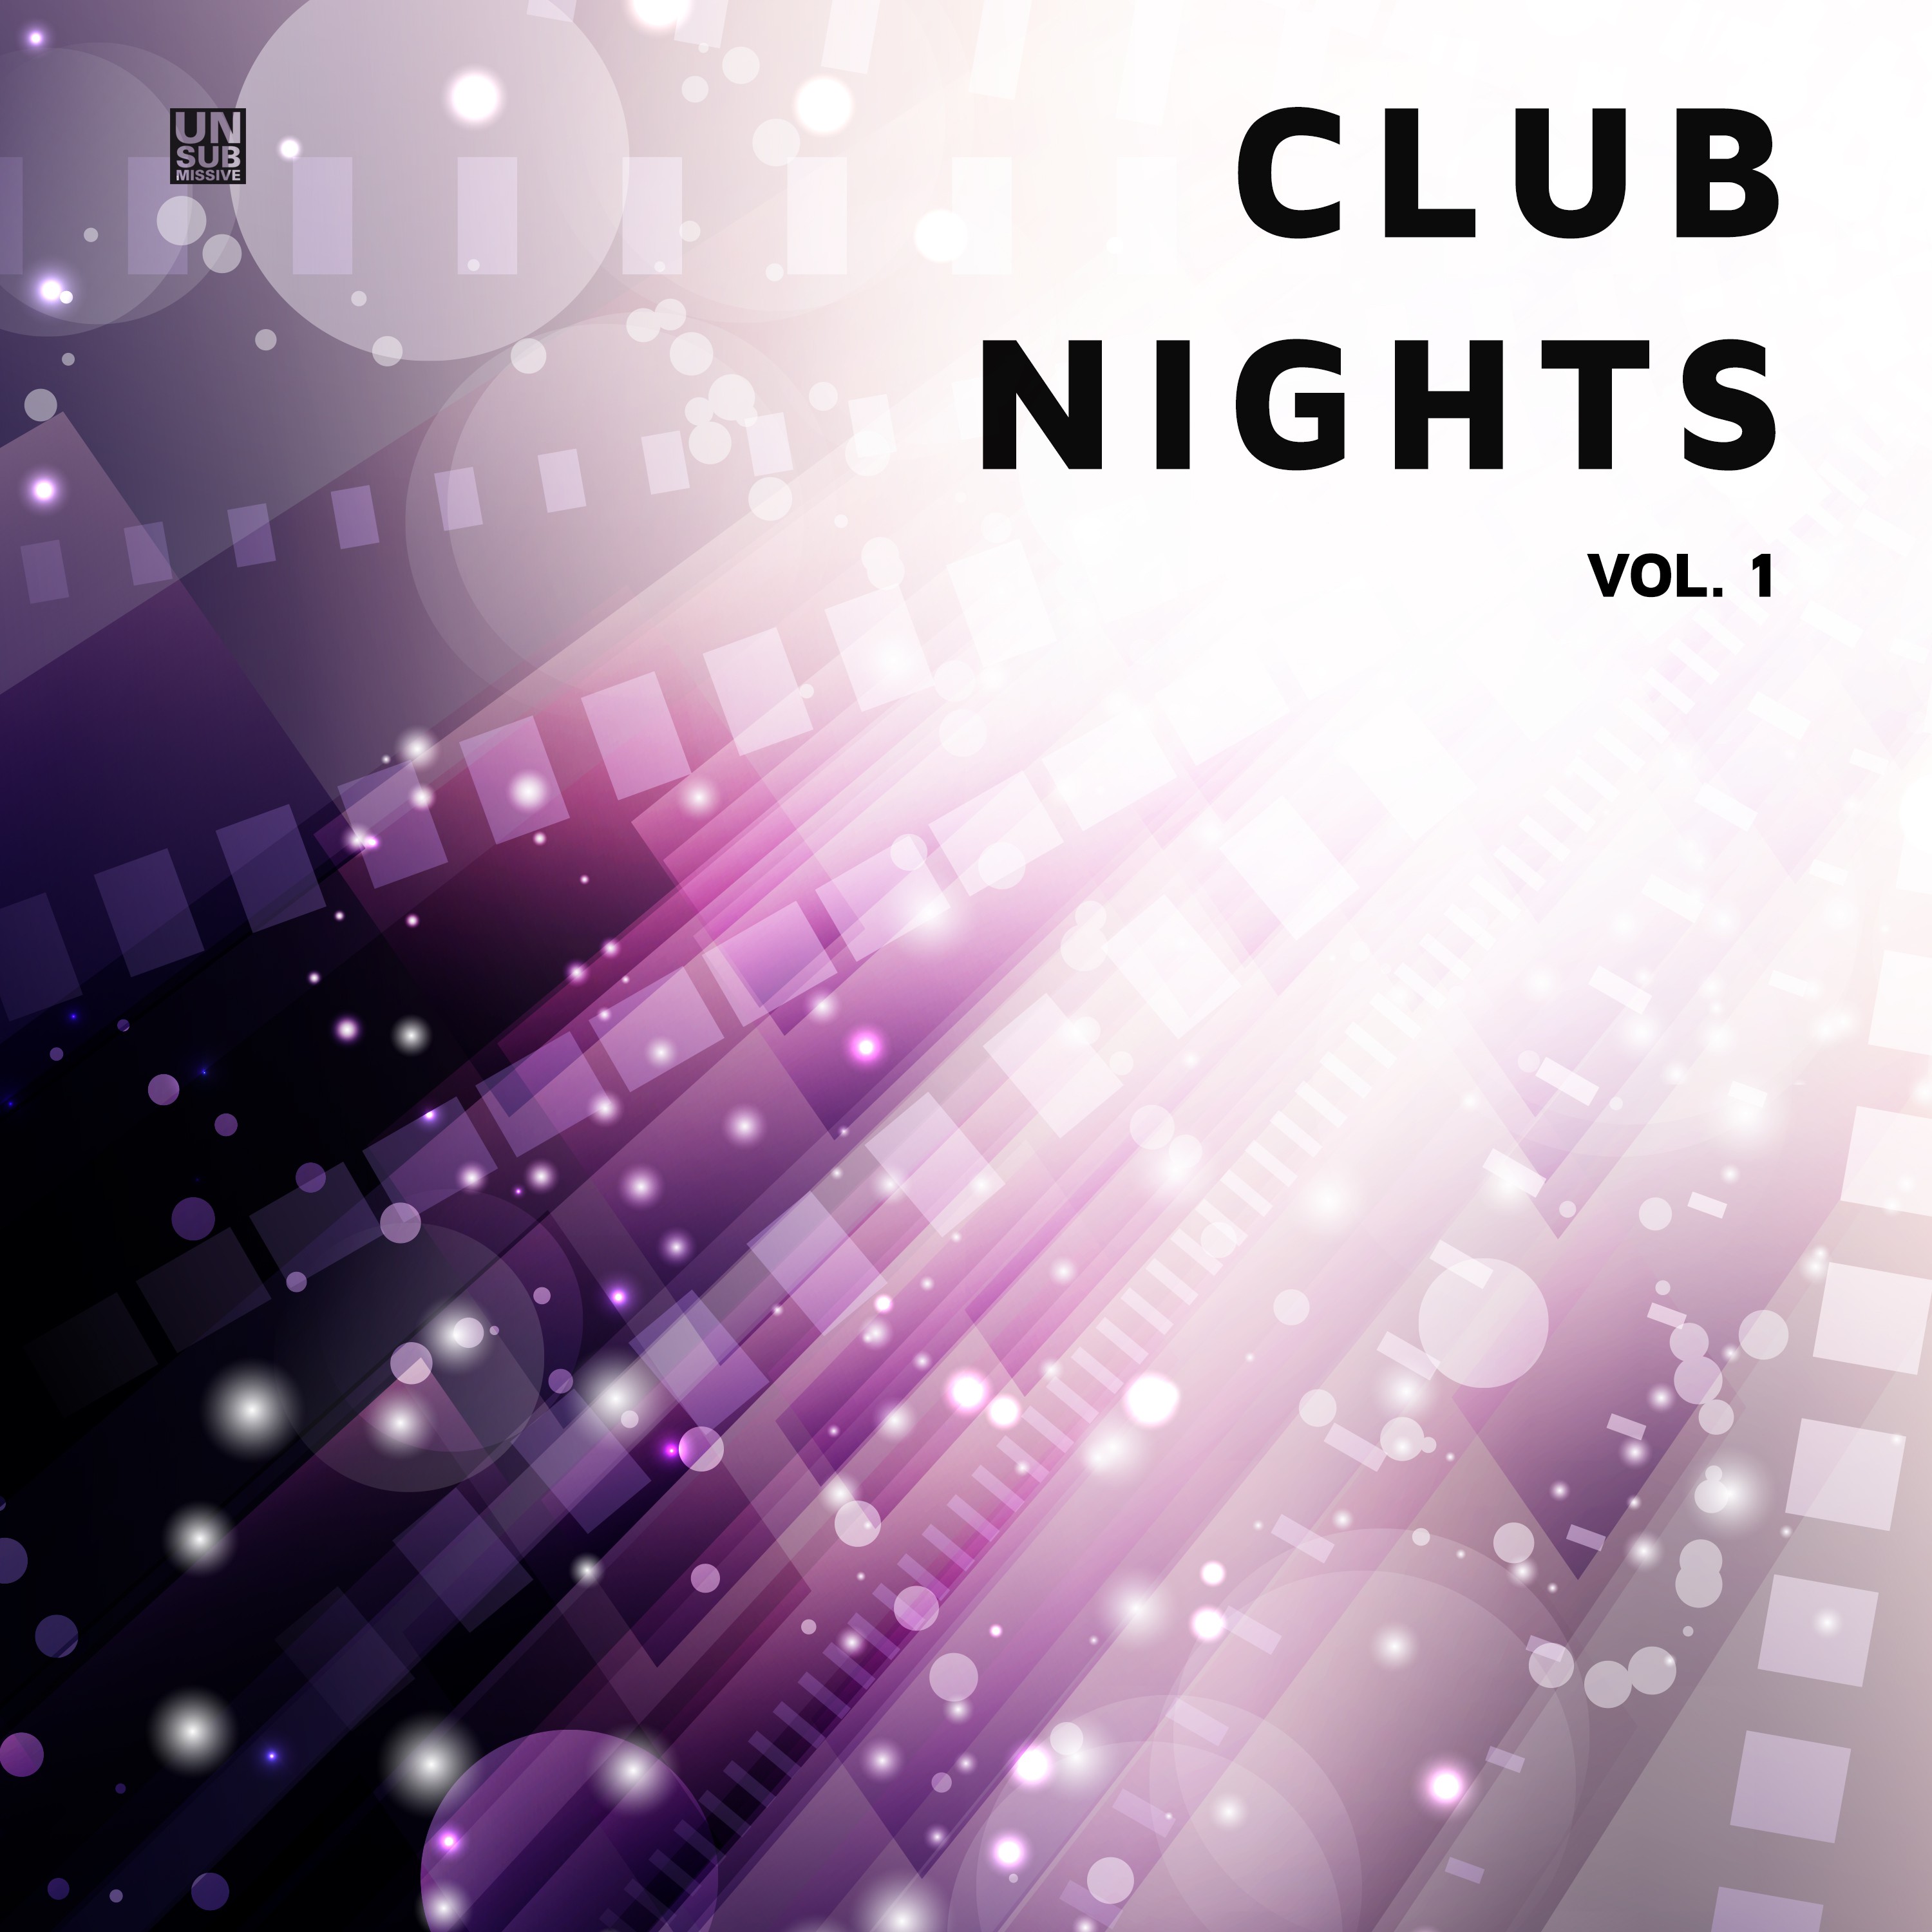 Club Nights